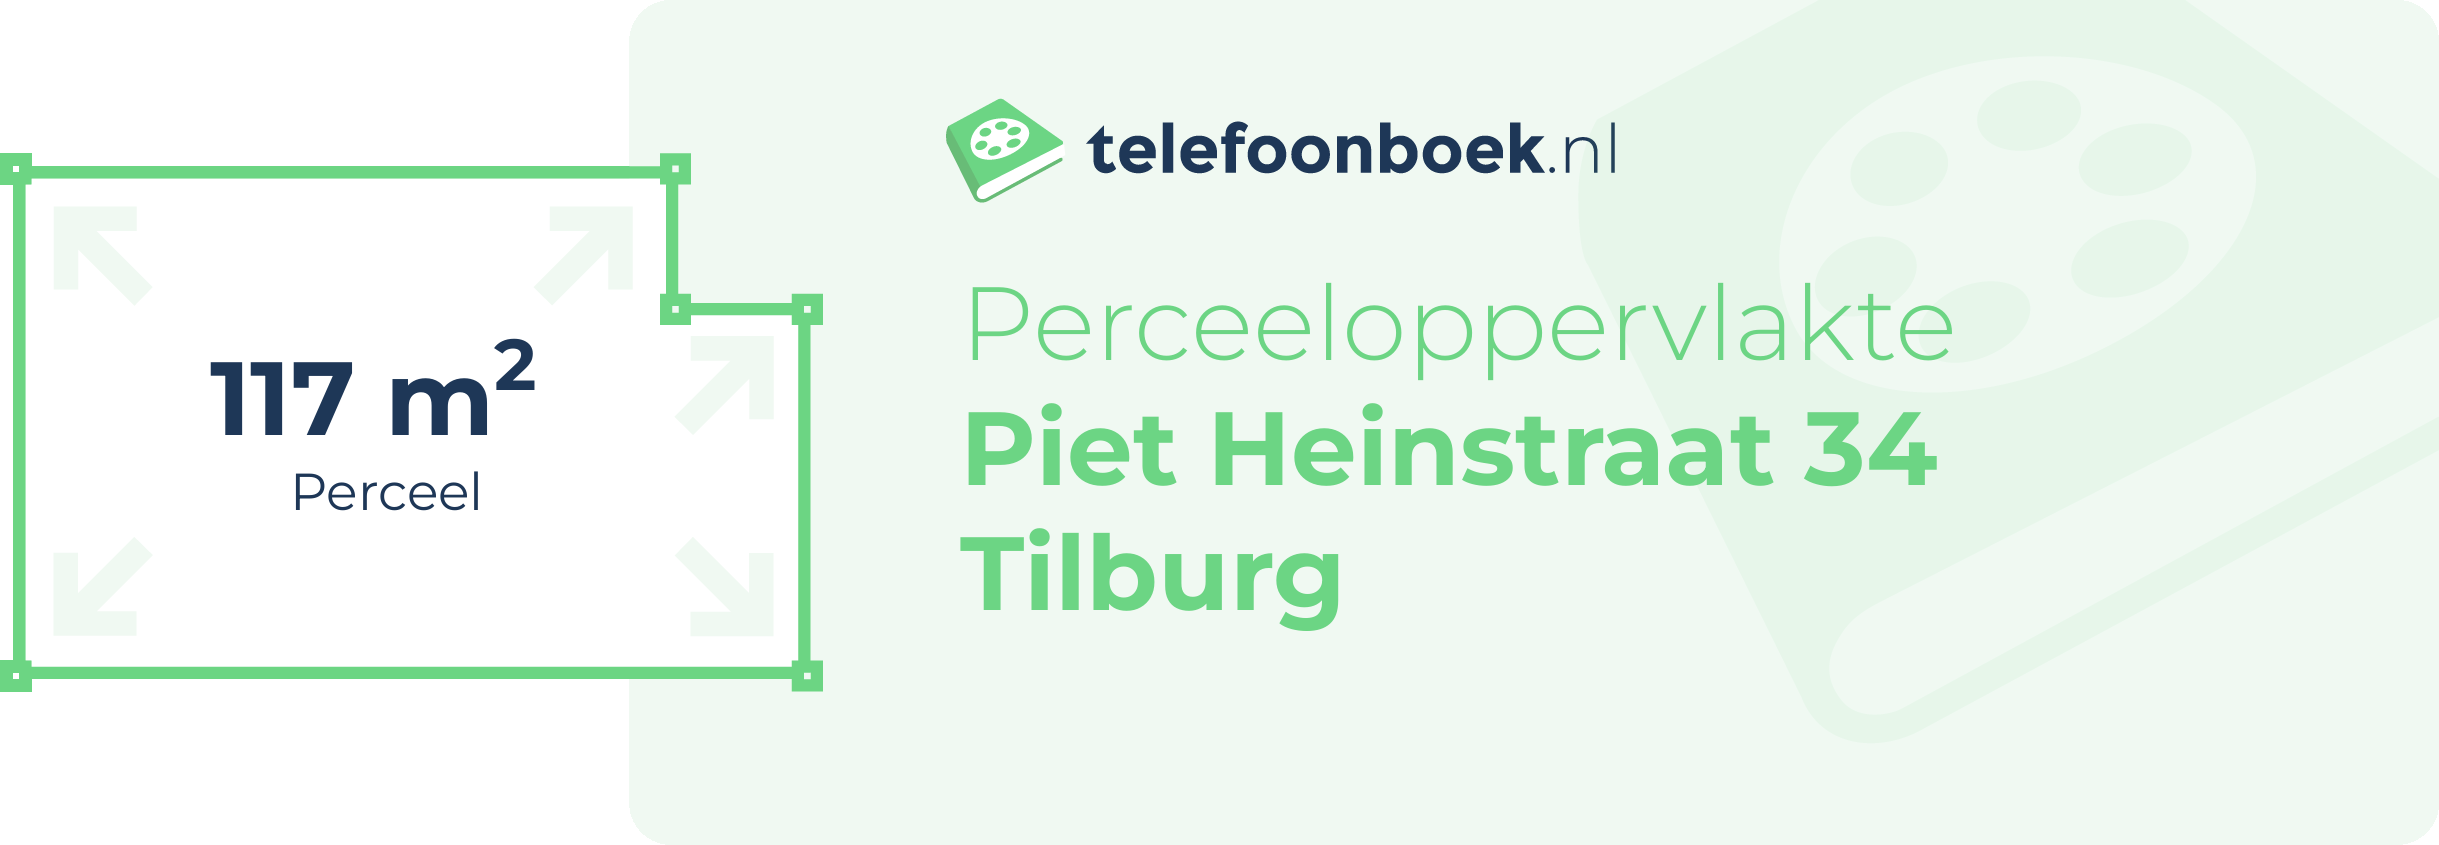 Perceeloppervlakte Piet Heinstraat 34 Tilburg